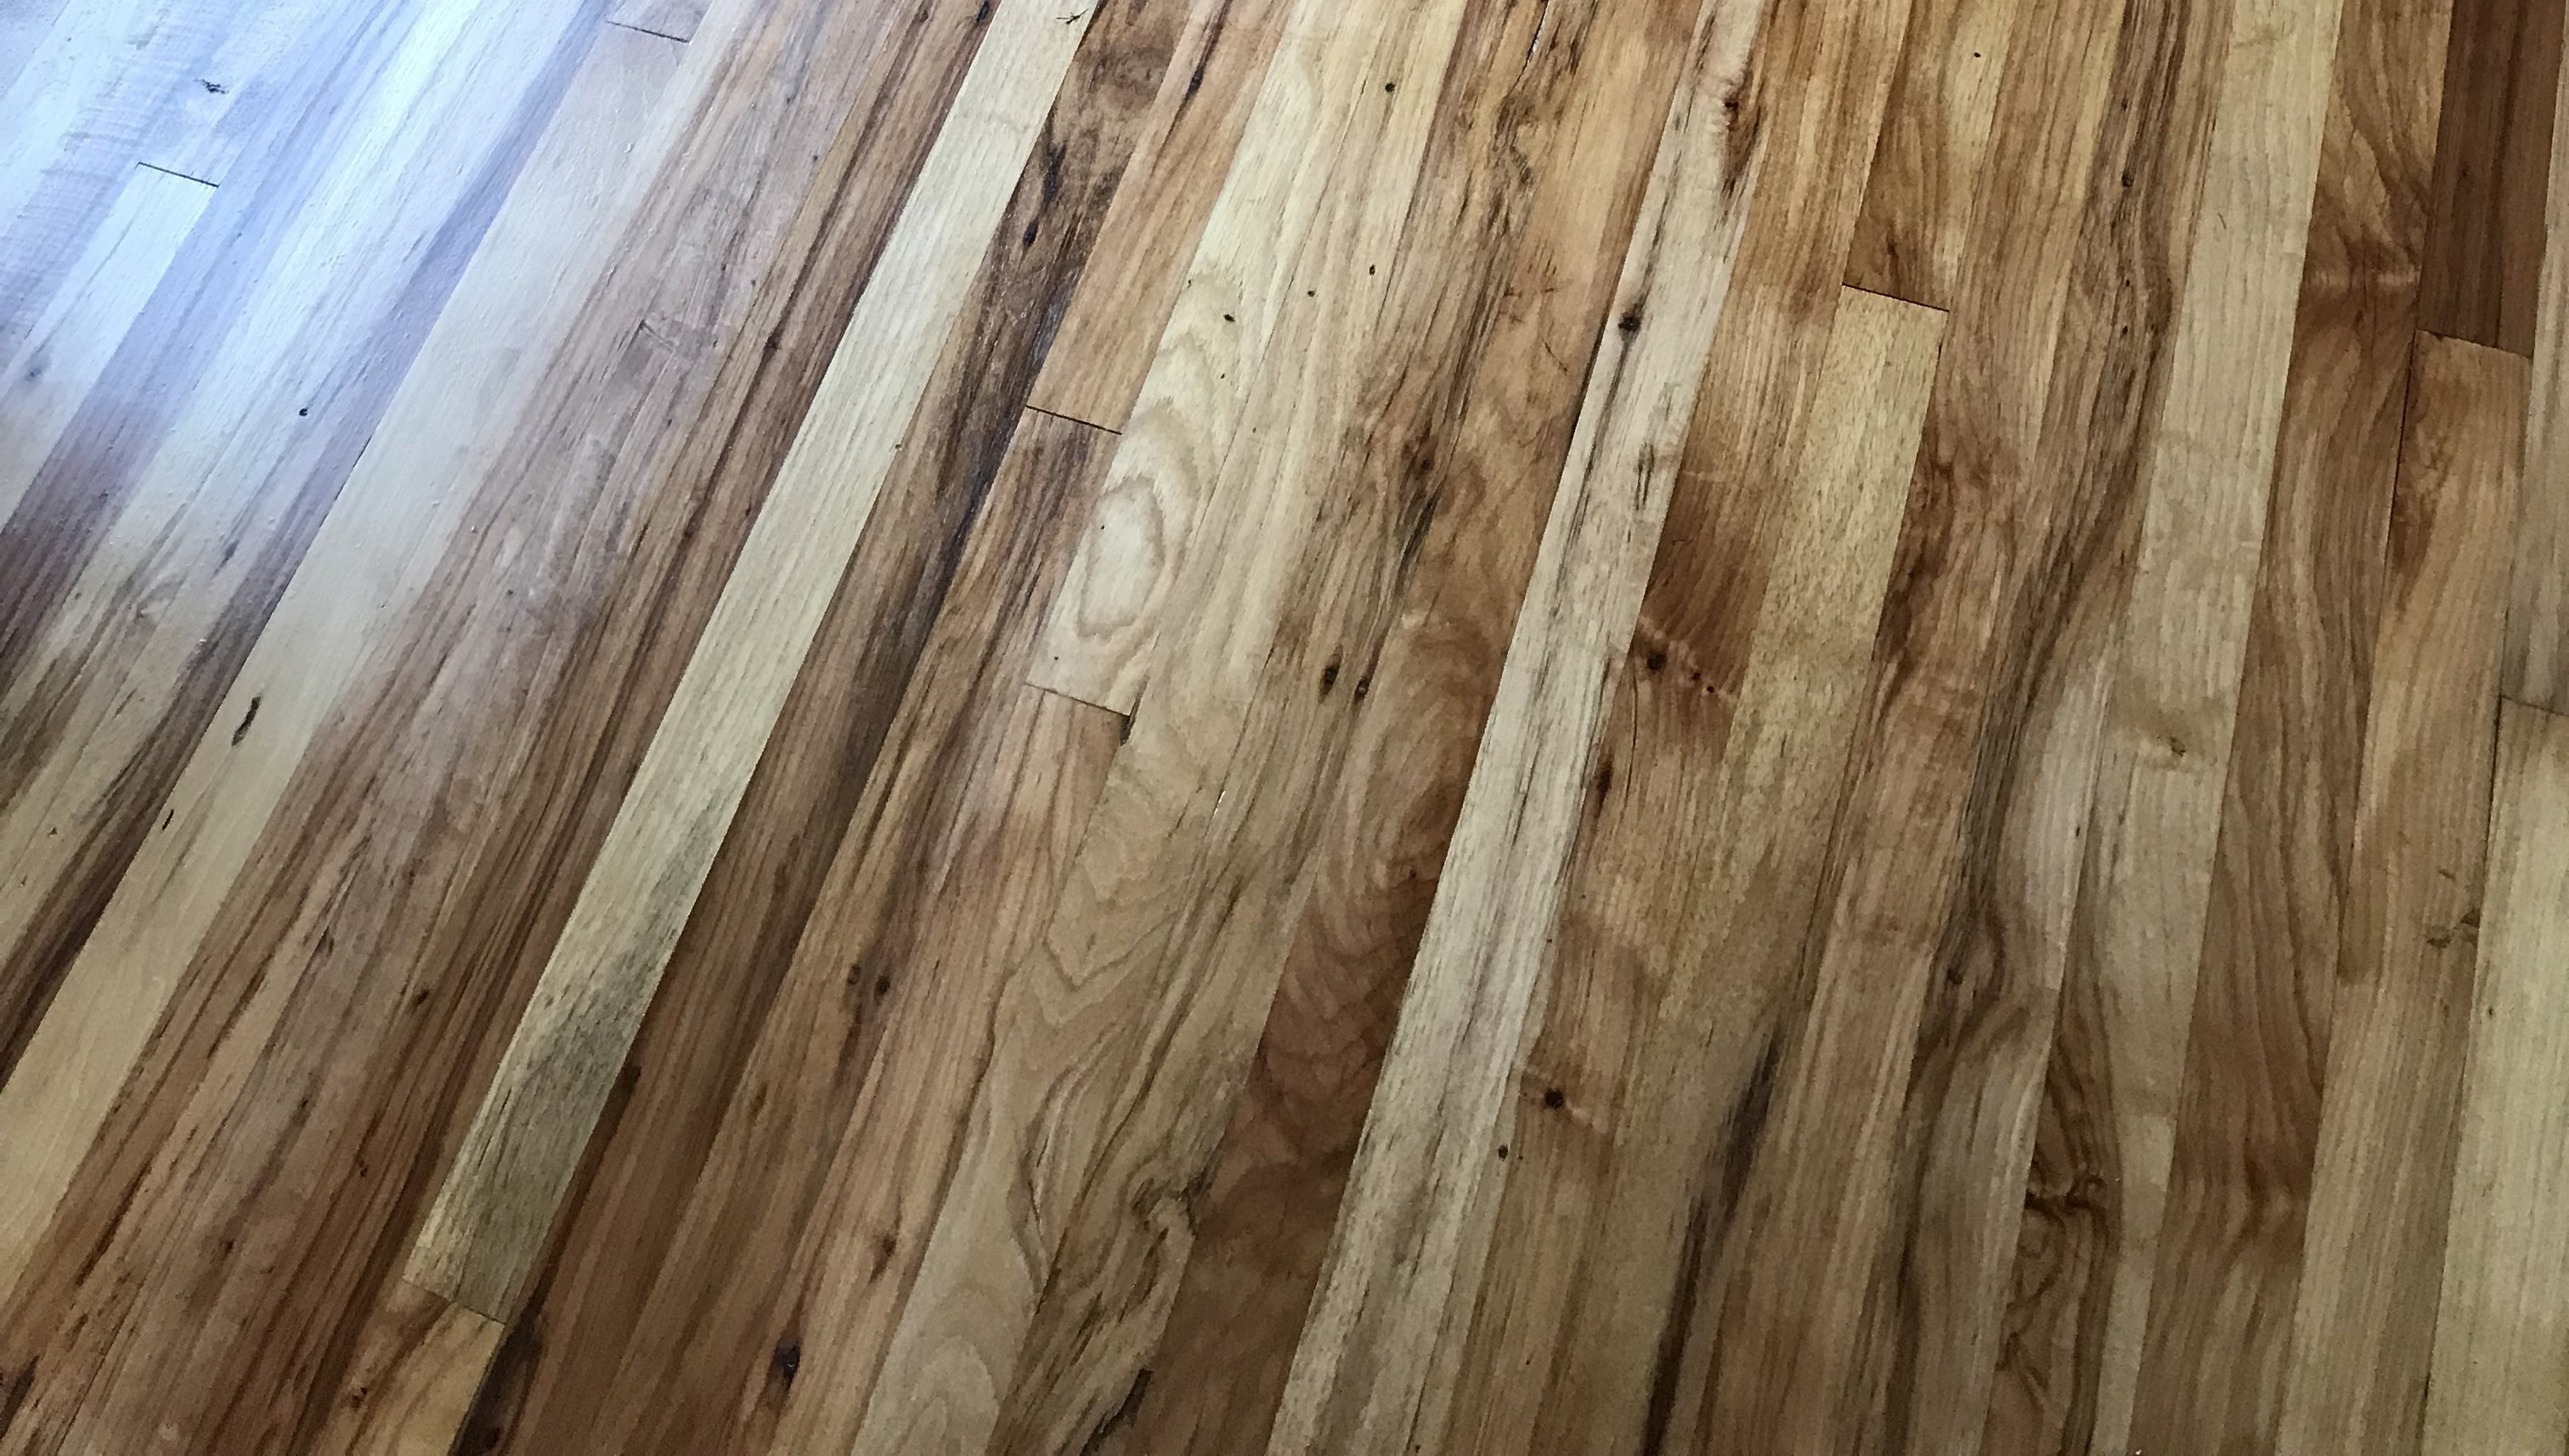 hardwood floor sanding vacuum of refinishing hardwood floors carlhaven made pertaining to refinishing hardwood floors